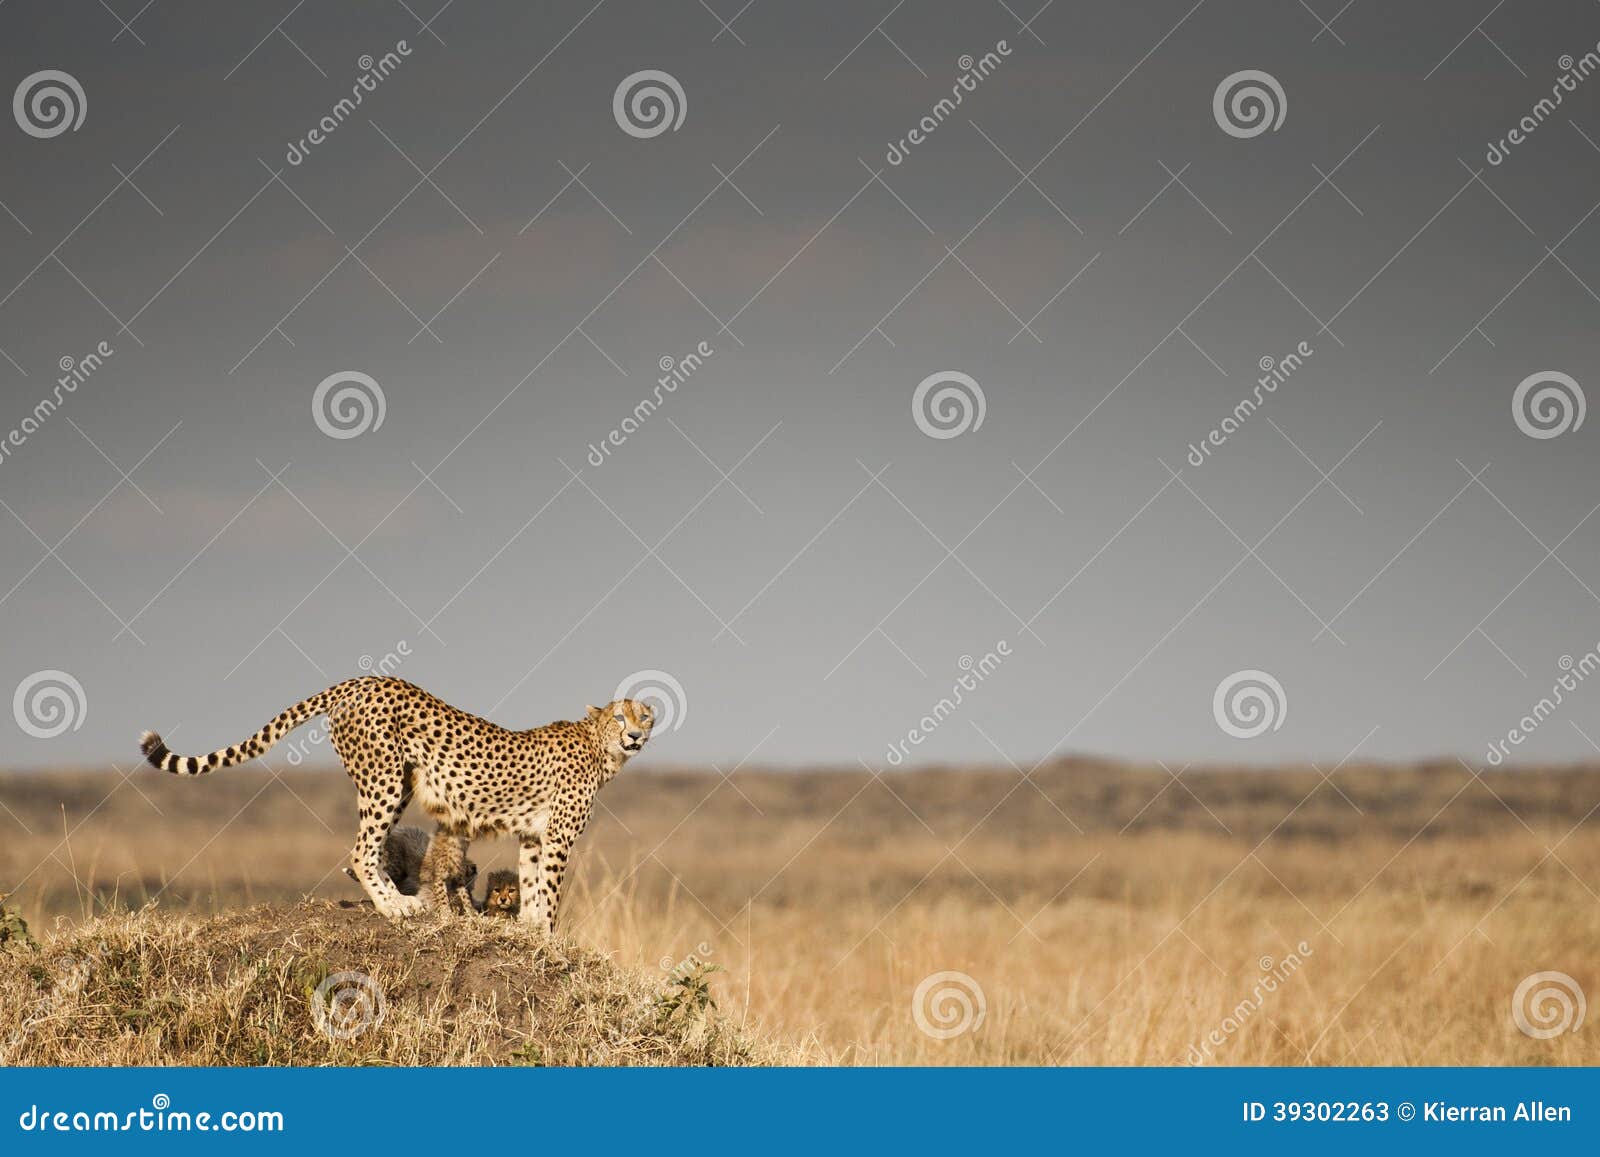 cheetah in the masai mara, kenya